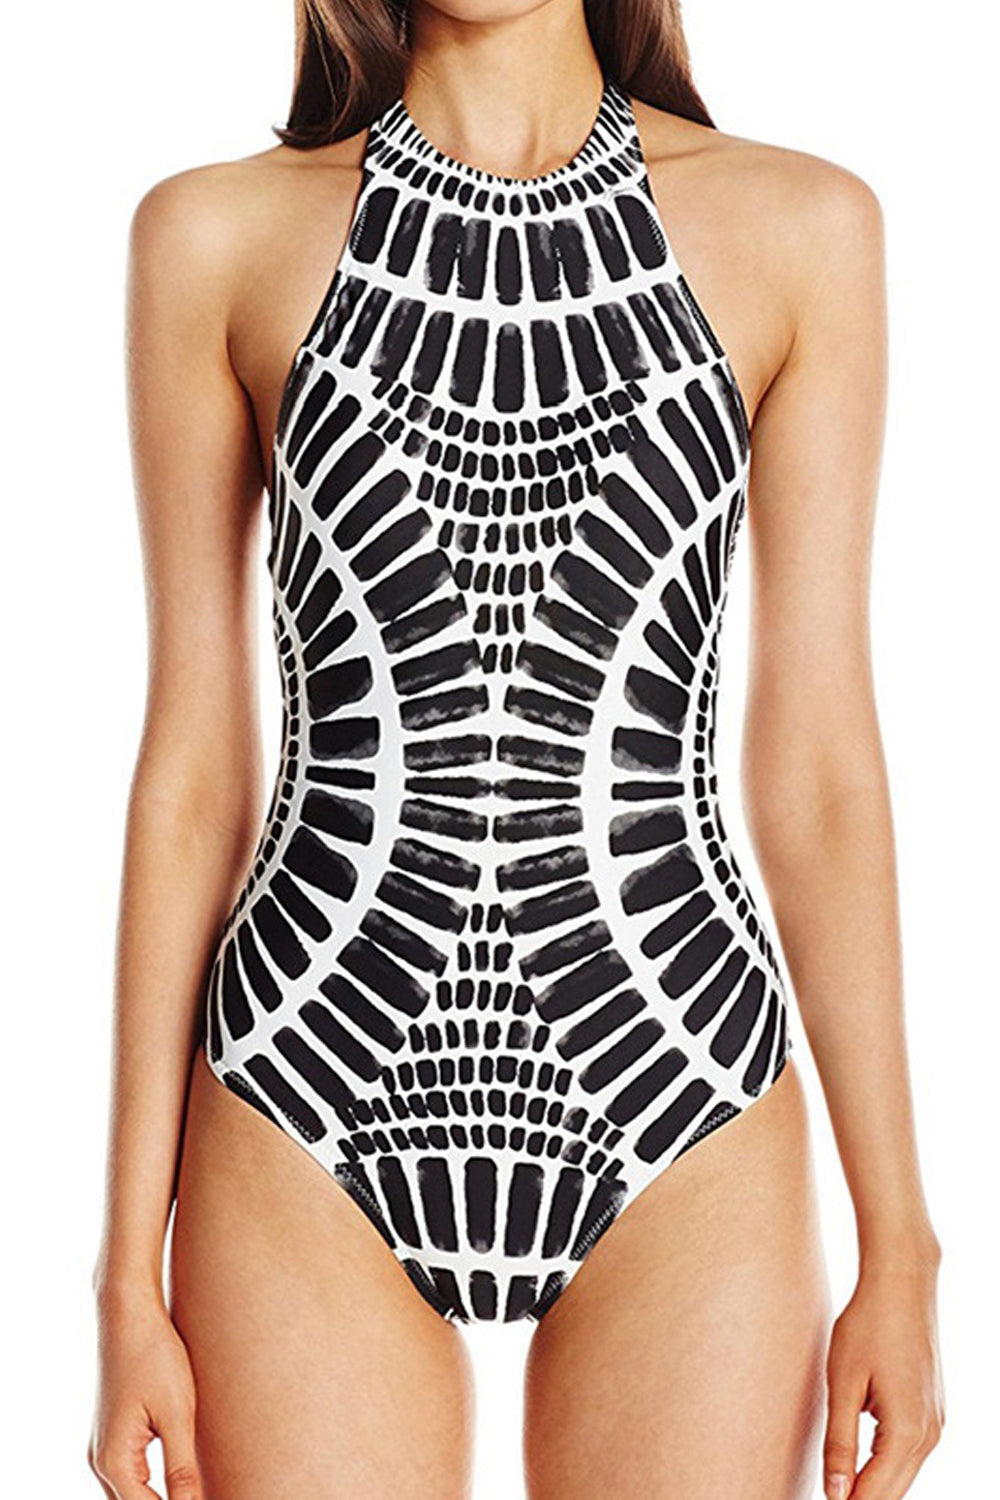 Iyasson Fashional Print Backless One-piece Swimsuit